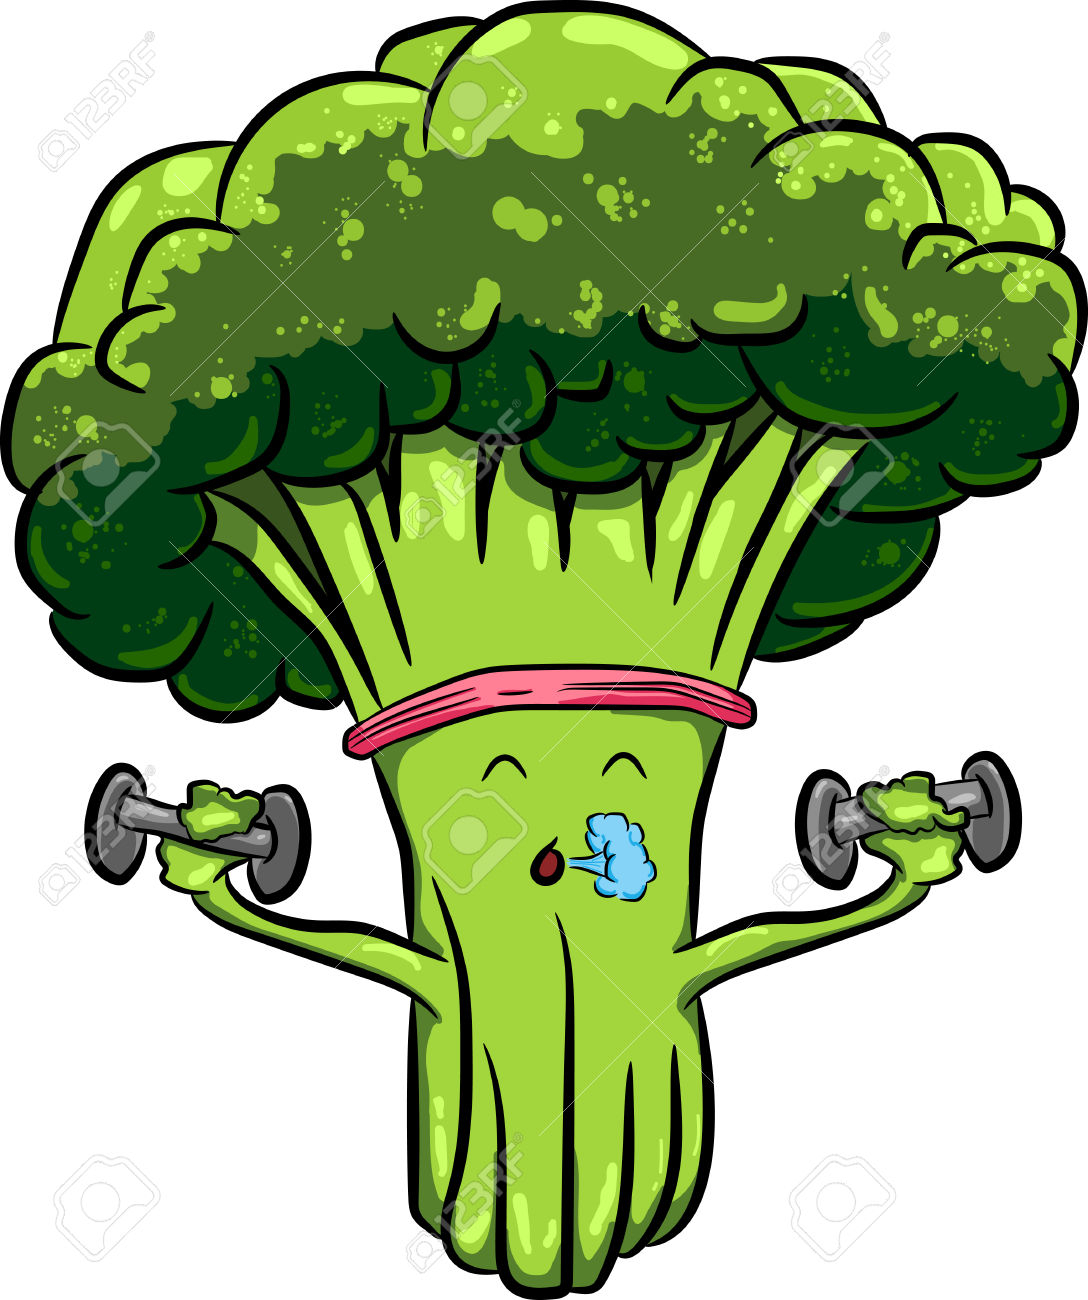 Broccoli Clipart for free